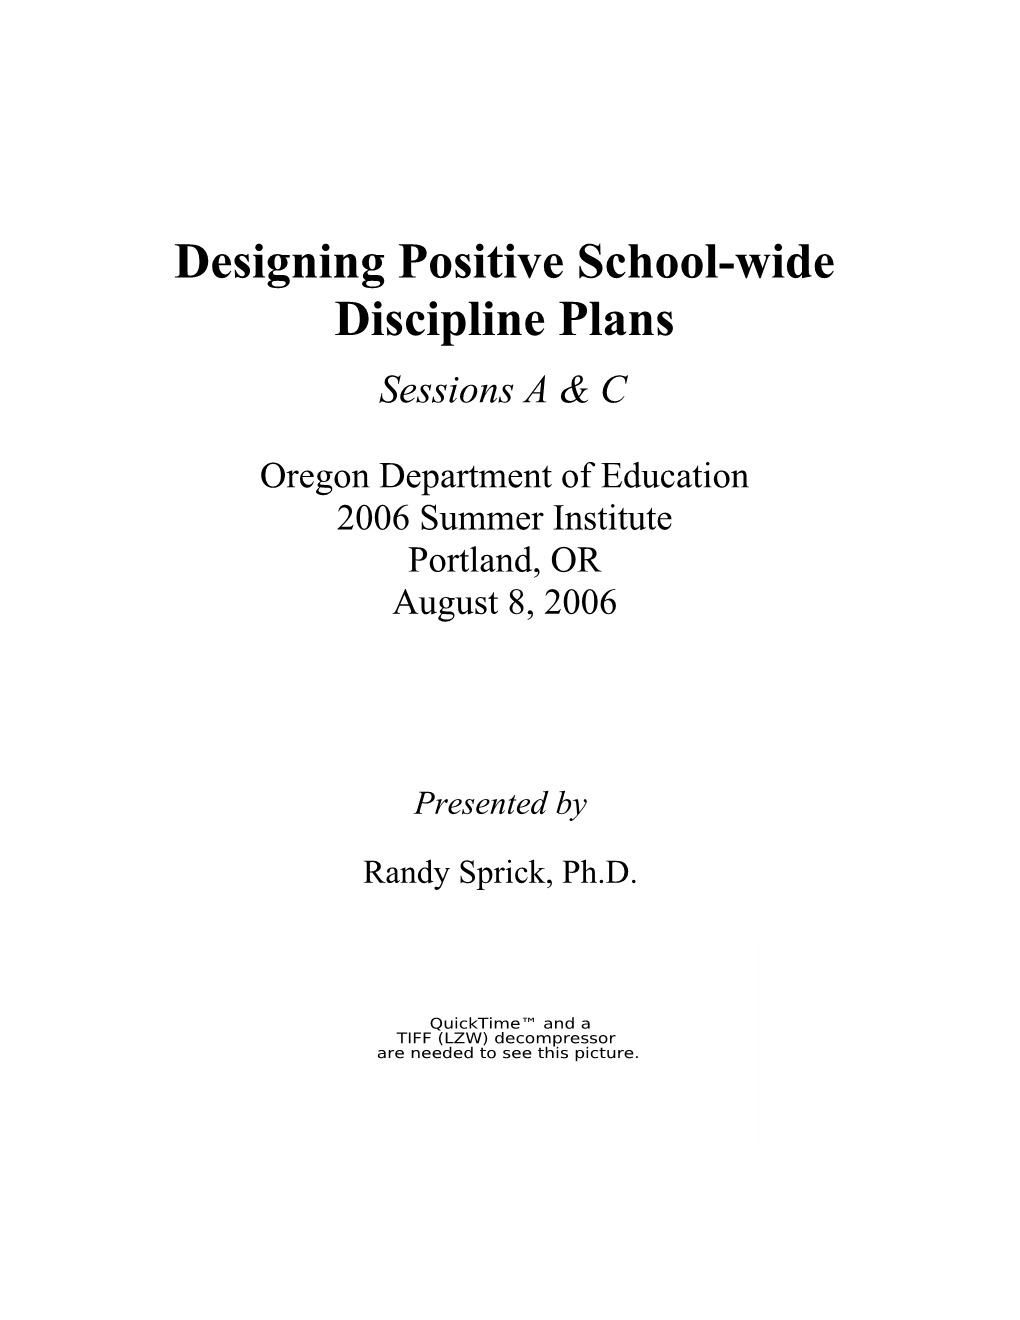 Designing Positive School-Wide Discipline Plans